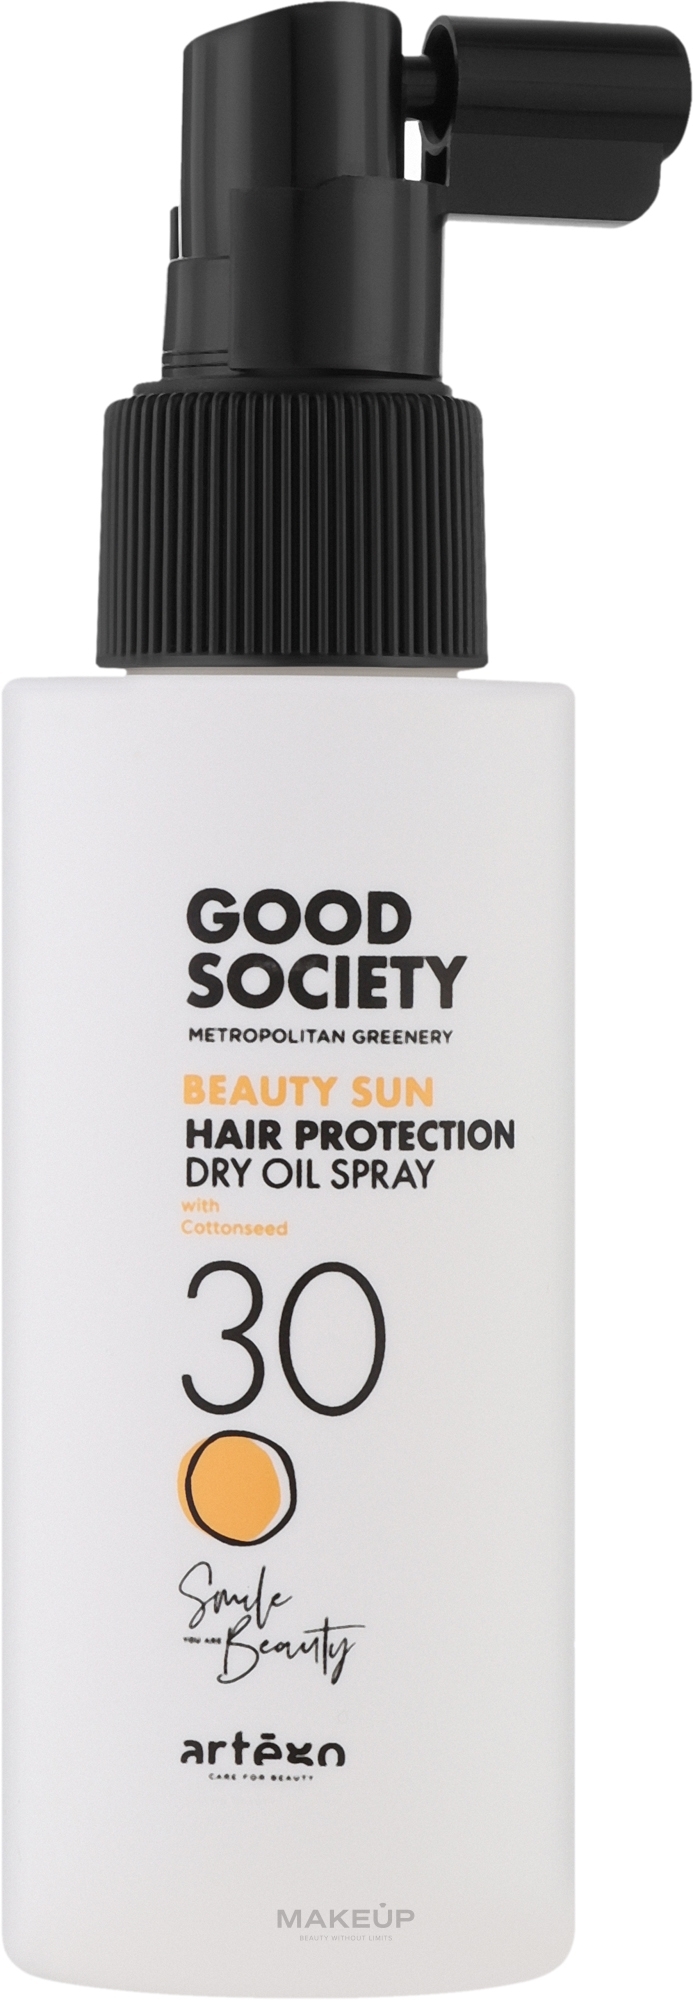 Солнцезащитный сухой масляный спрей для волос - Artego Good Society Beauty Sun 30 Hair Protection Dry Oil Spray — фото 100ml